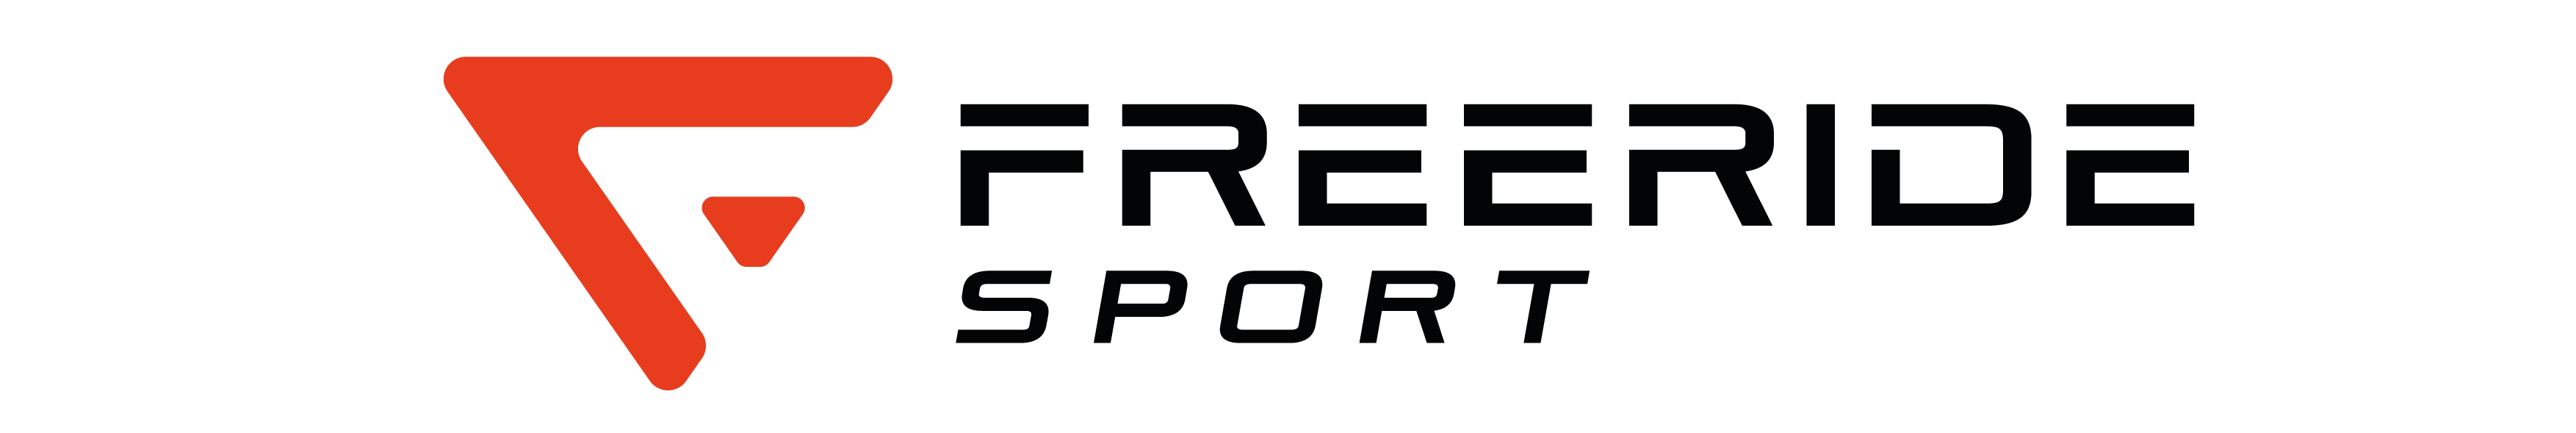 freeridesport logo